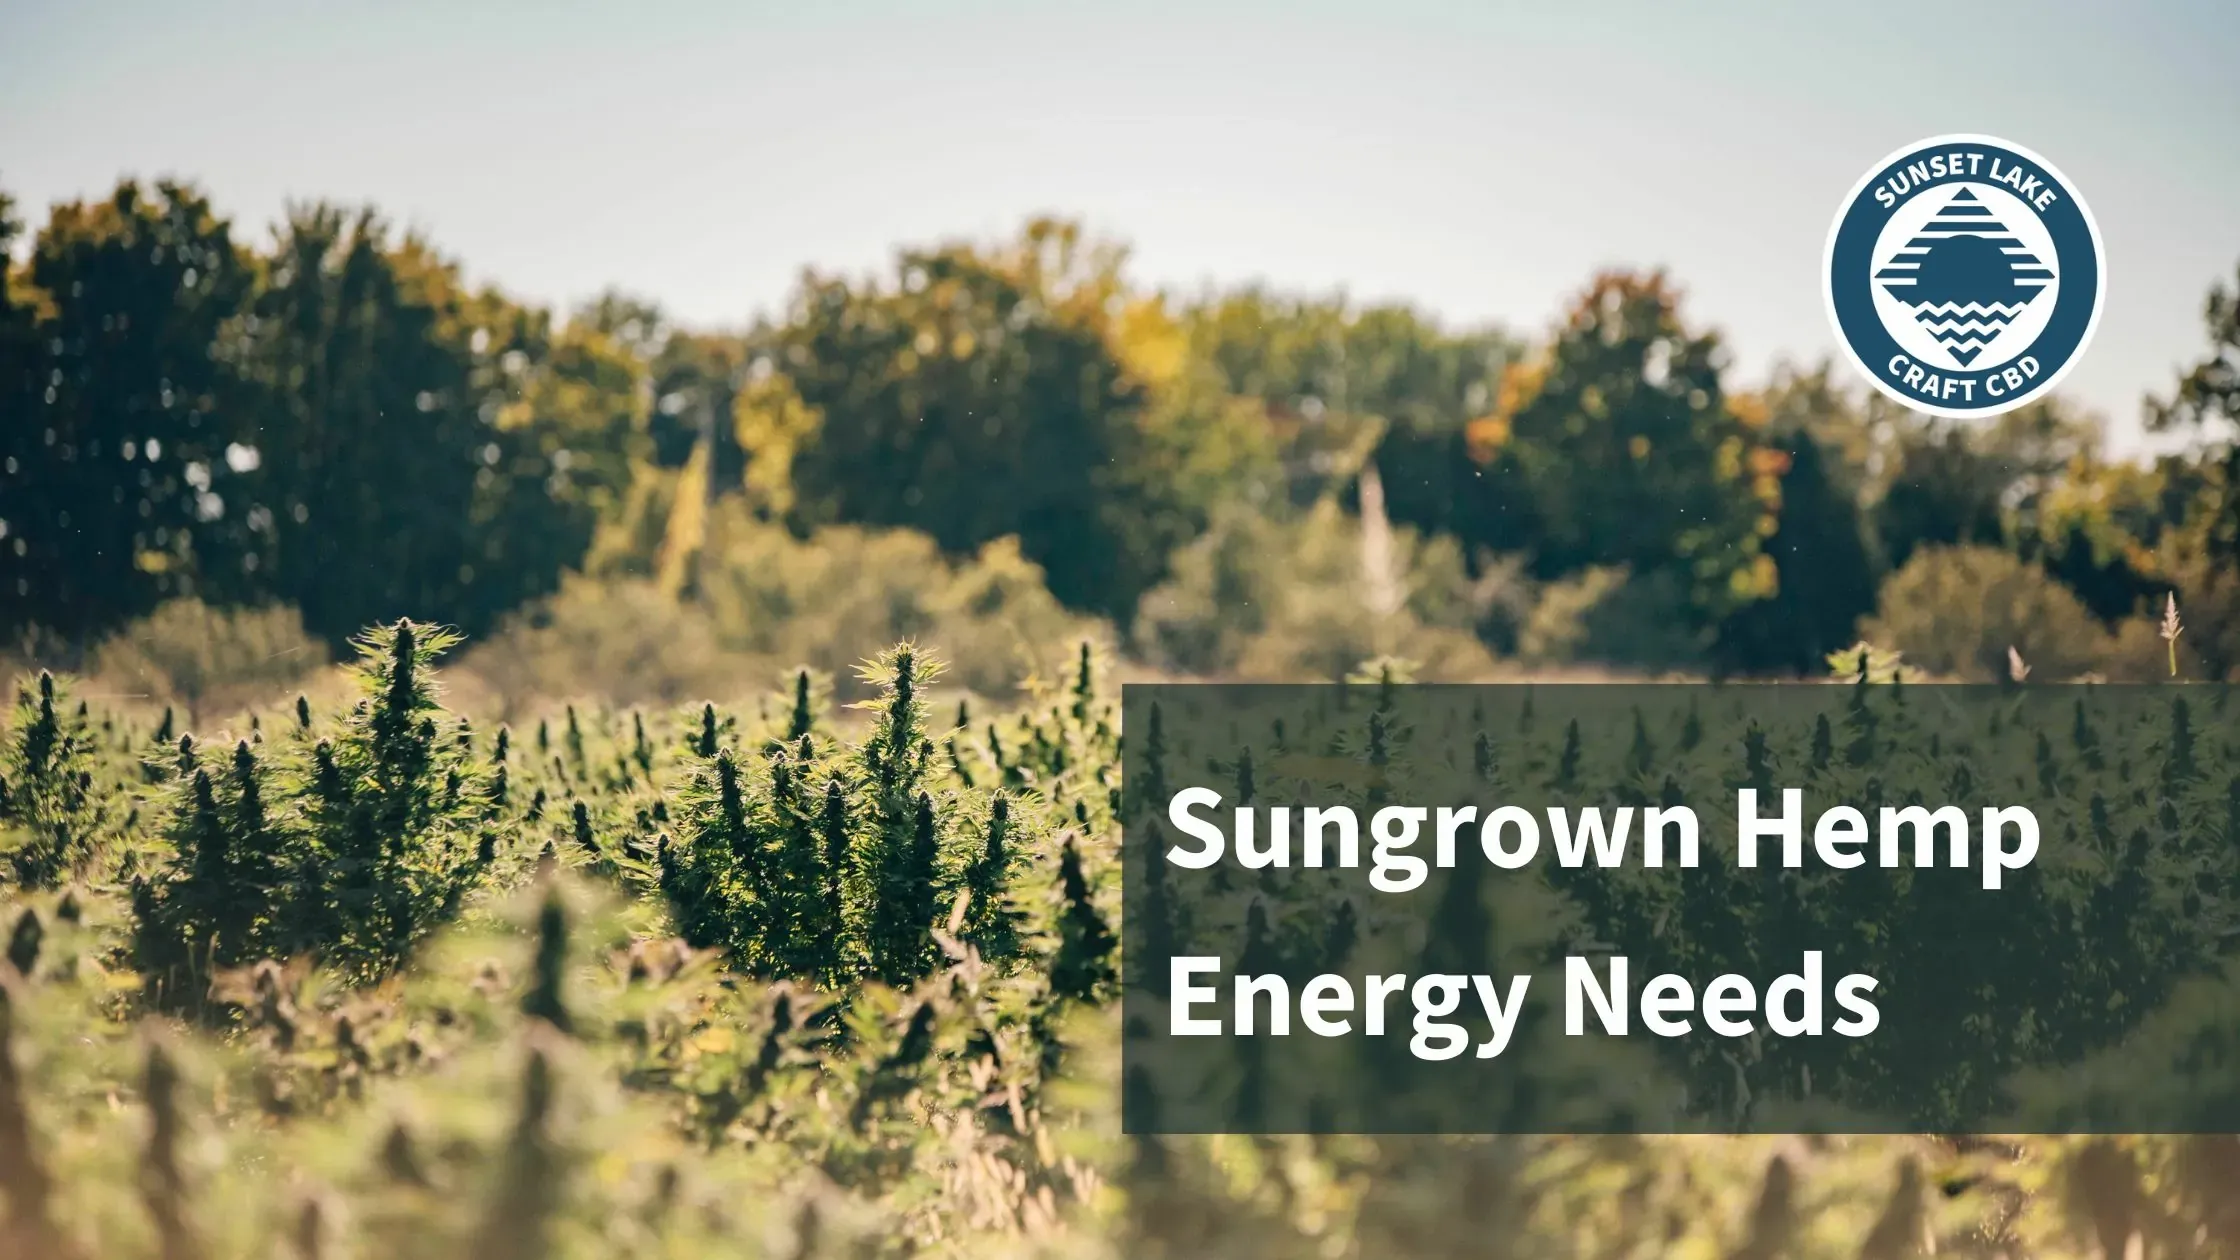 Field of Sungrown hemp with the text "Sungrown hemp energy needs"